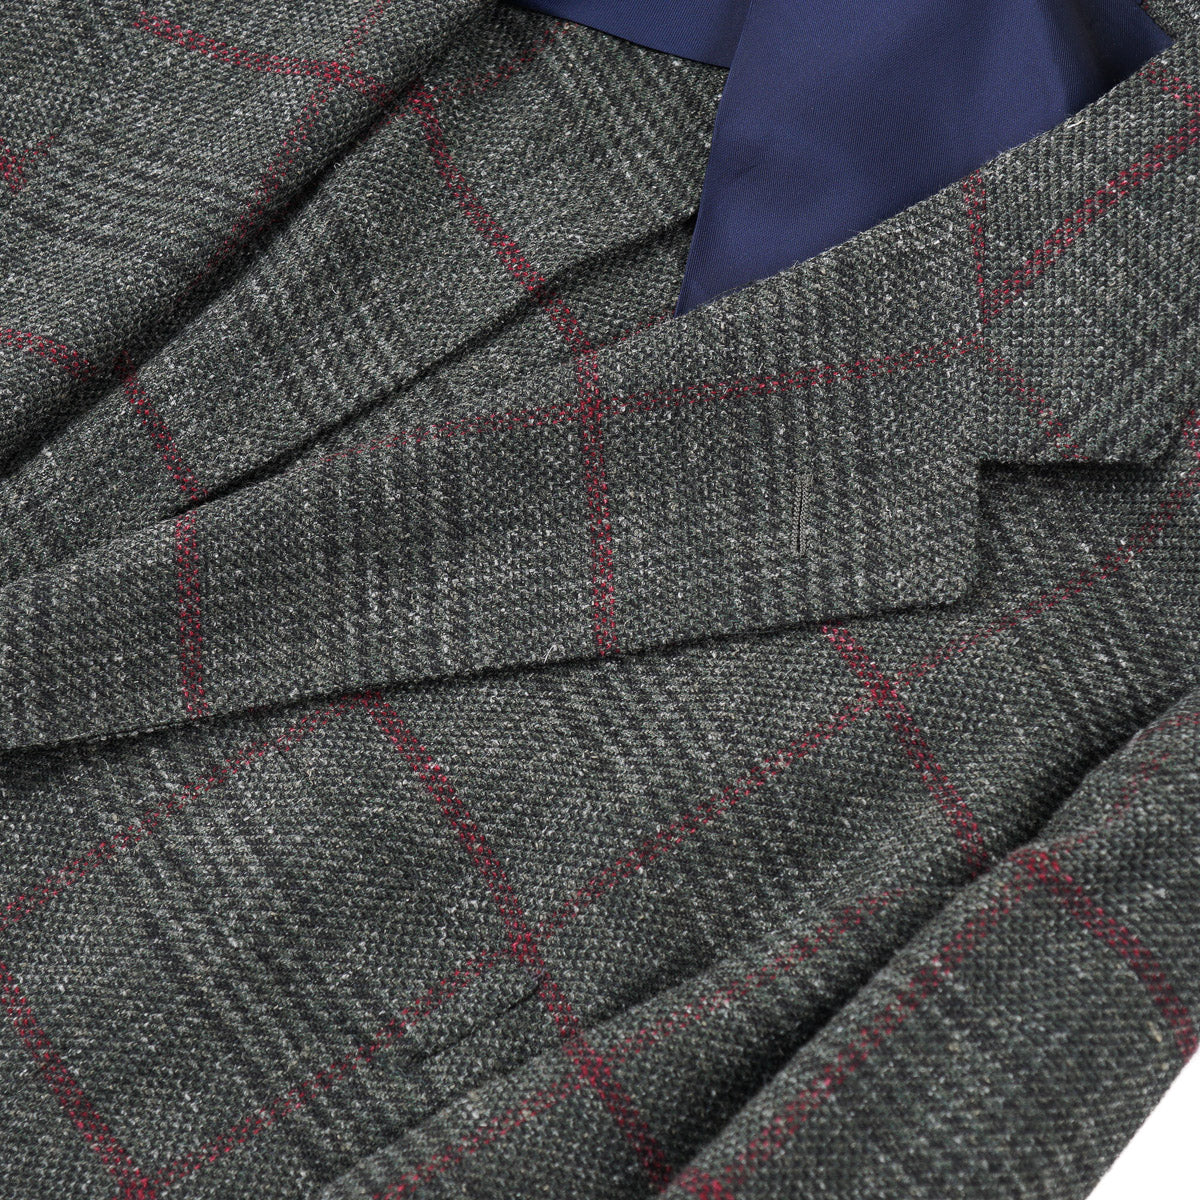 Sartorio Woven Wool-Linen Sport Coat - Top Shelf Apparel